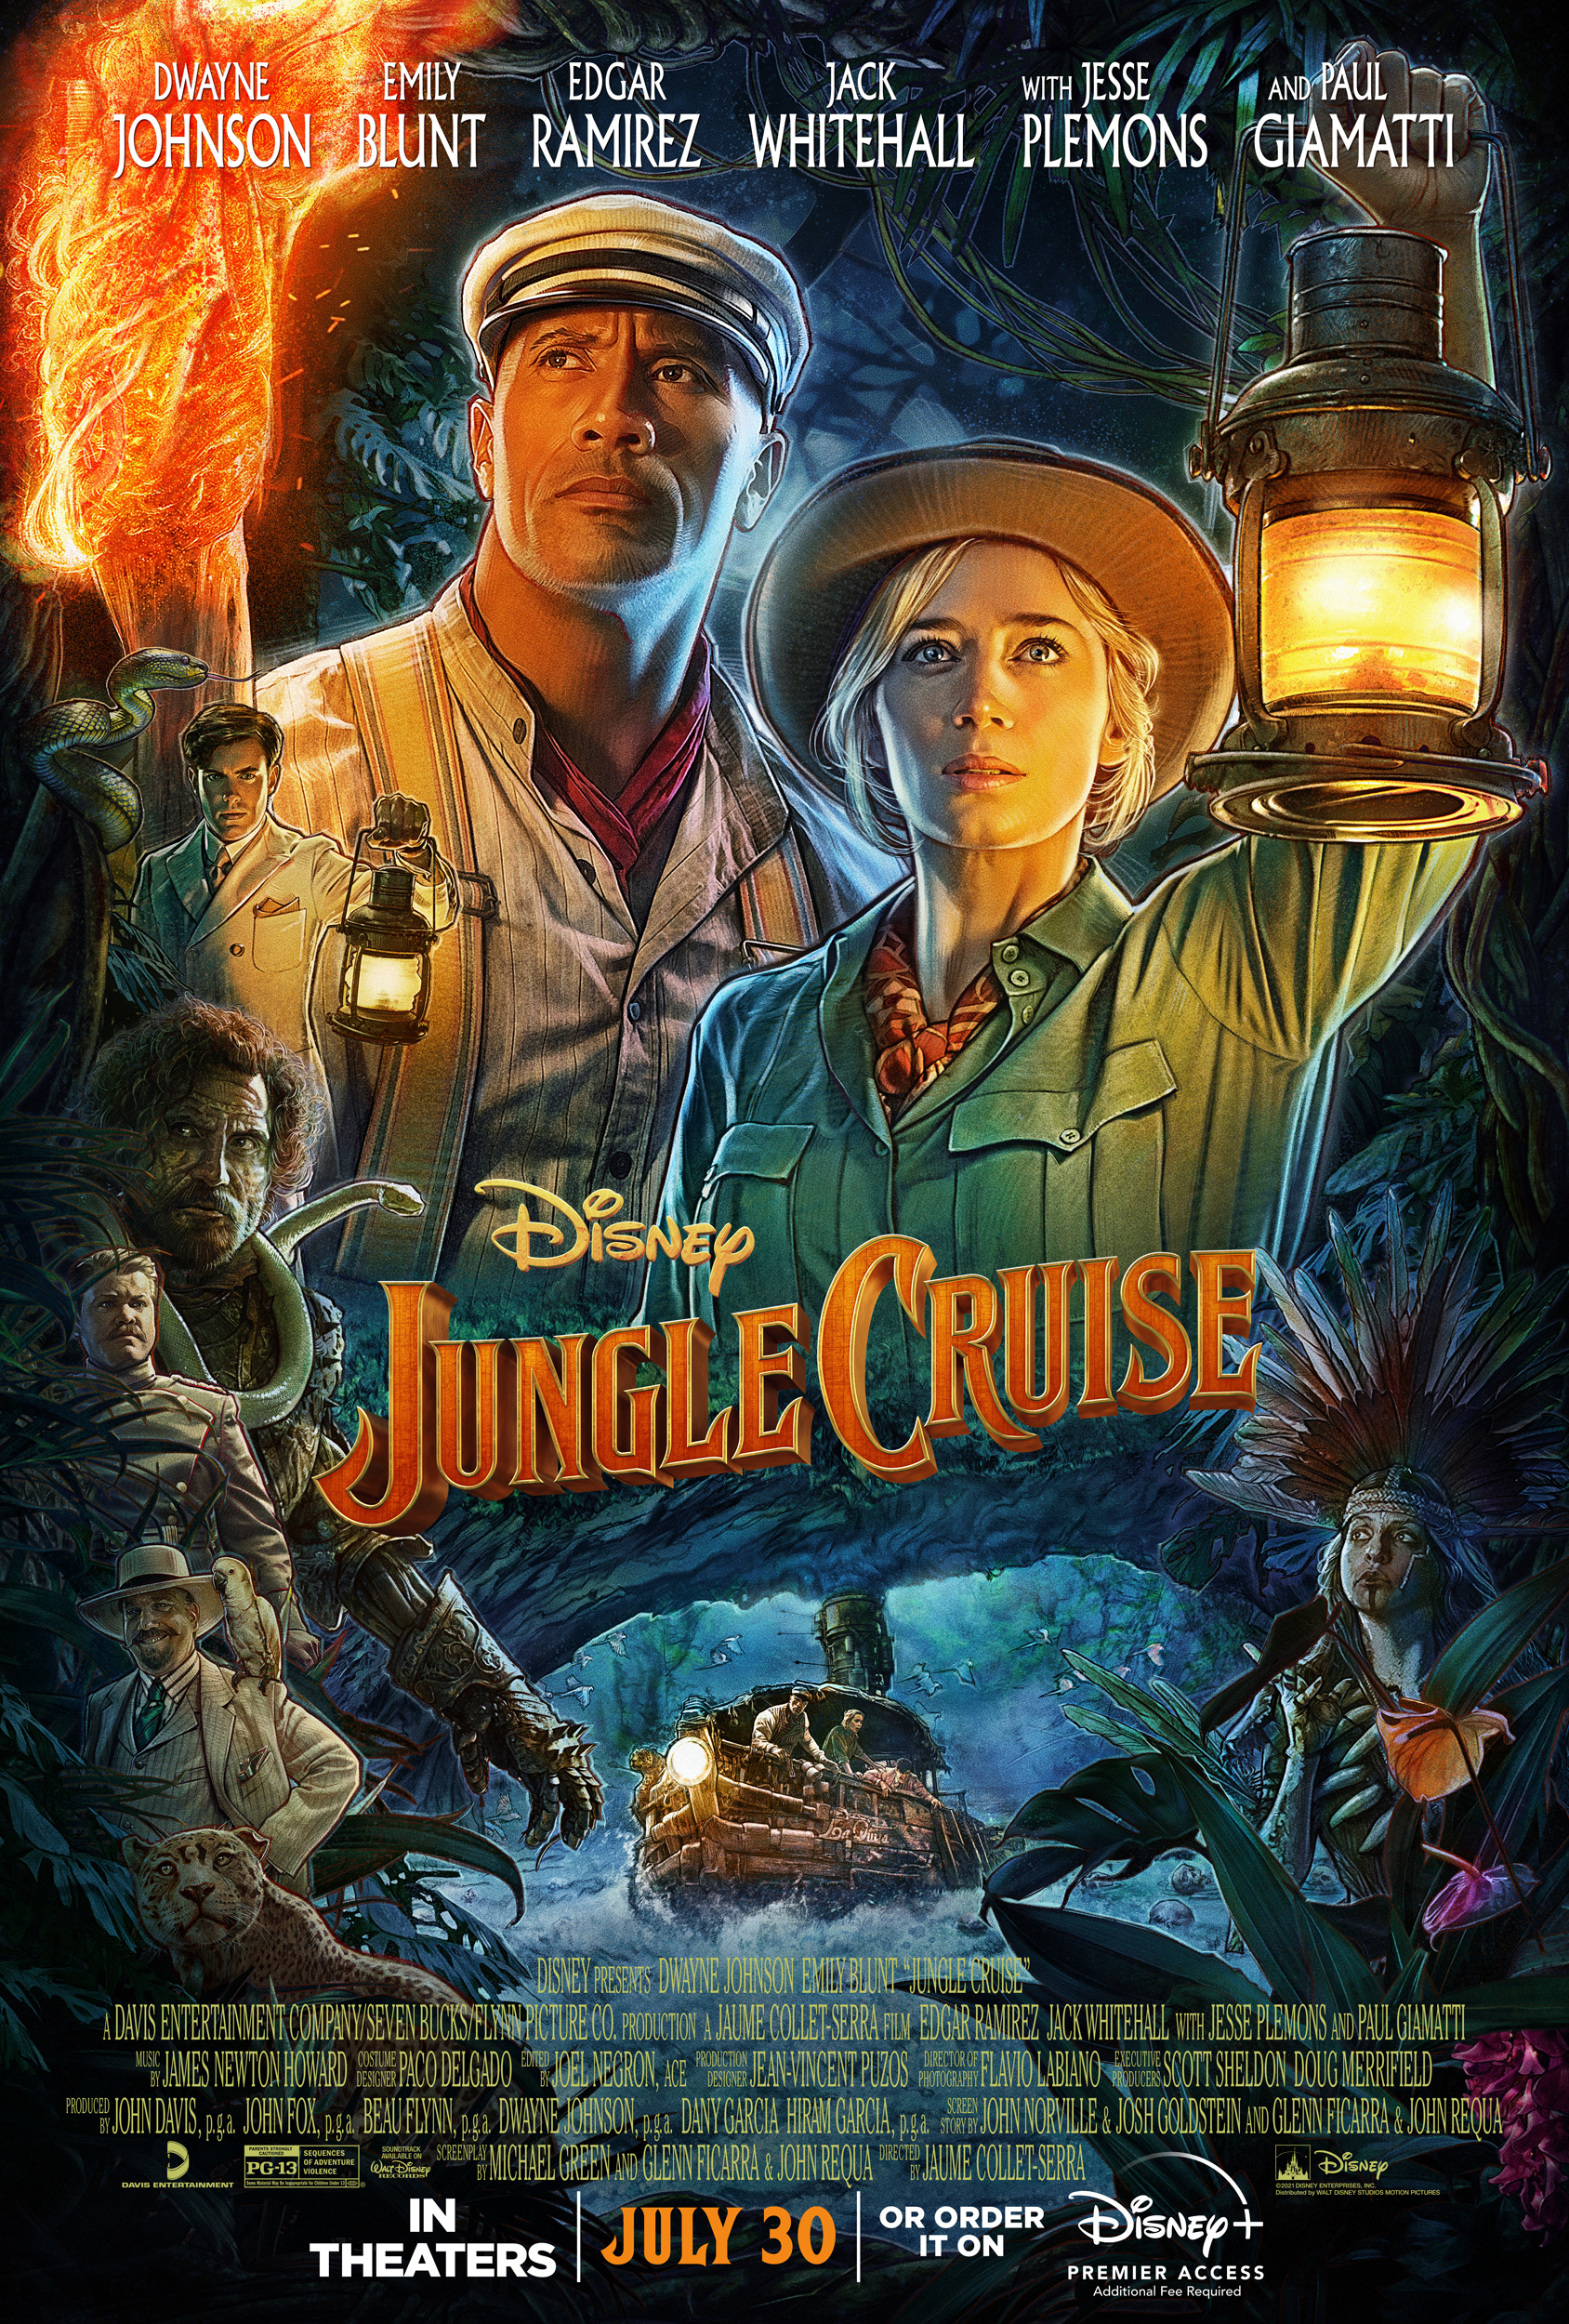 Disney's Jungle Cruise movie poster